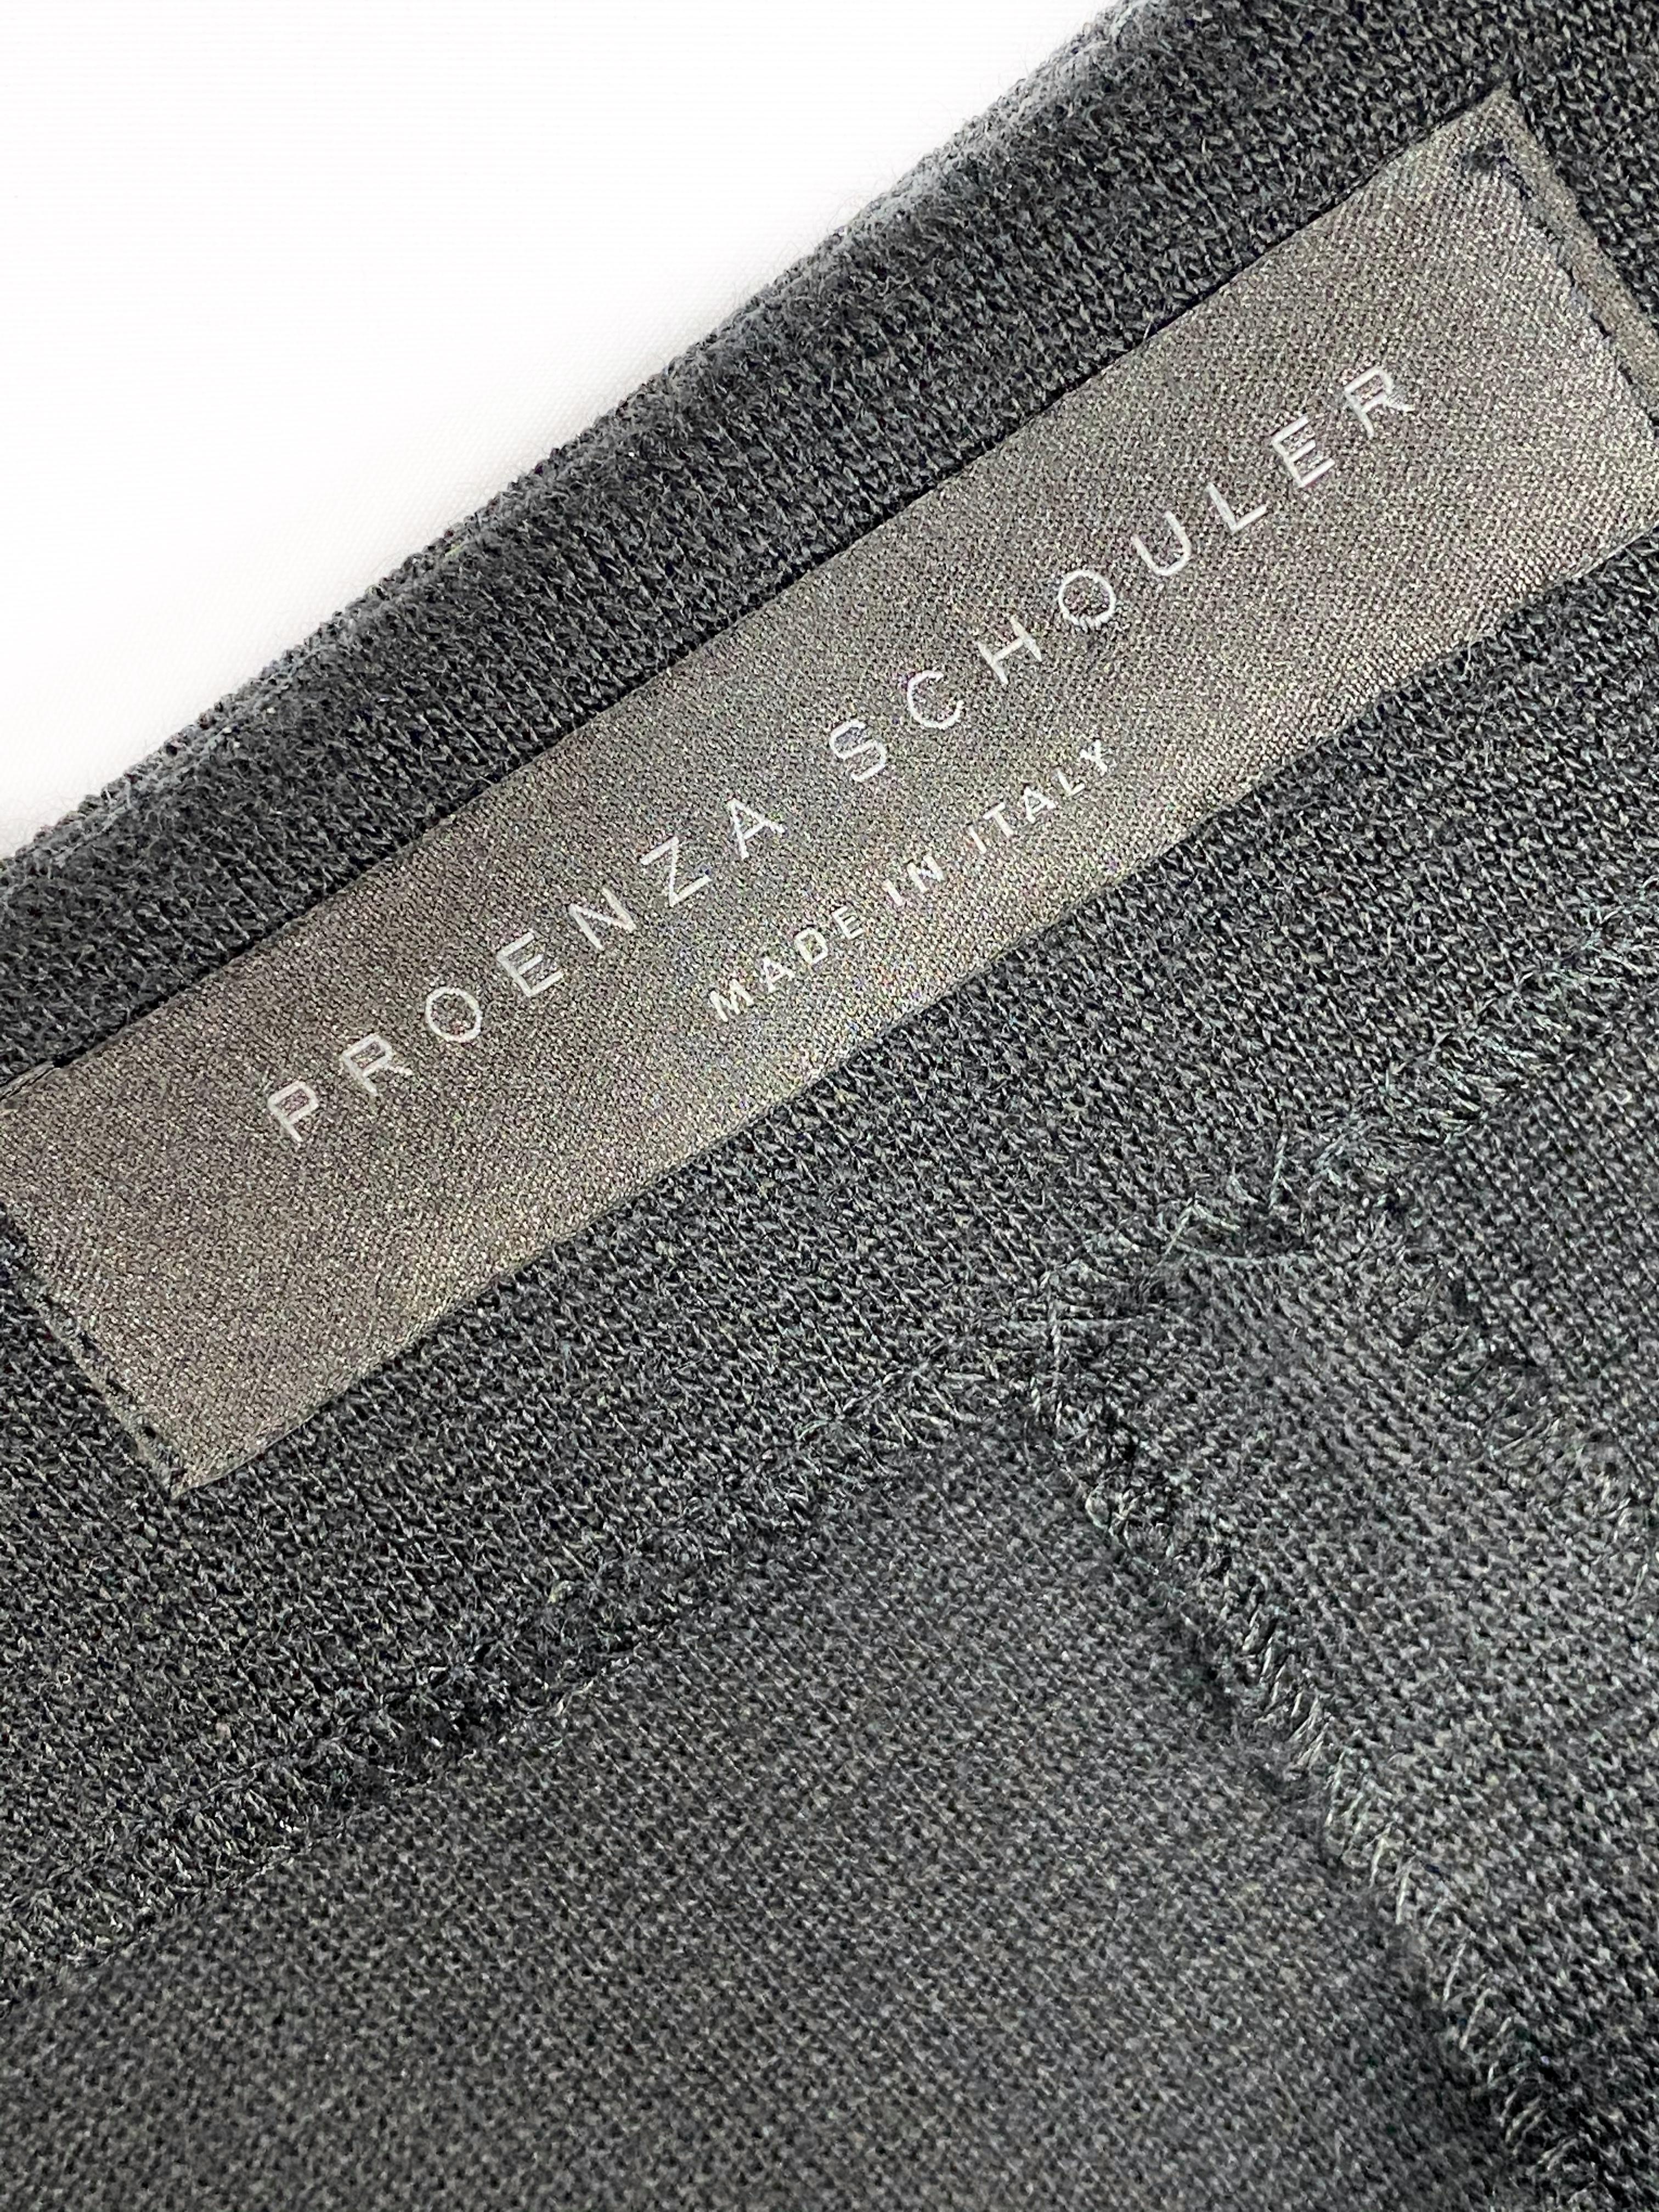 Proenza Schouler Black Wool Mini Coat Dress w/ Buttons Size 4 For Sale 4